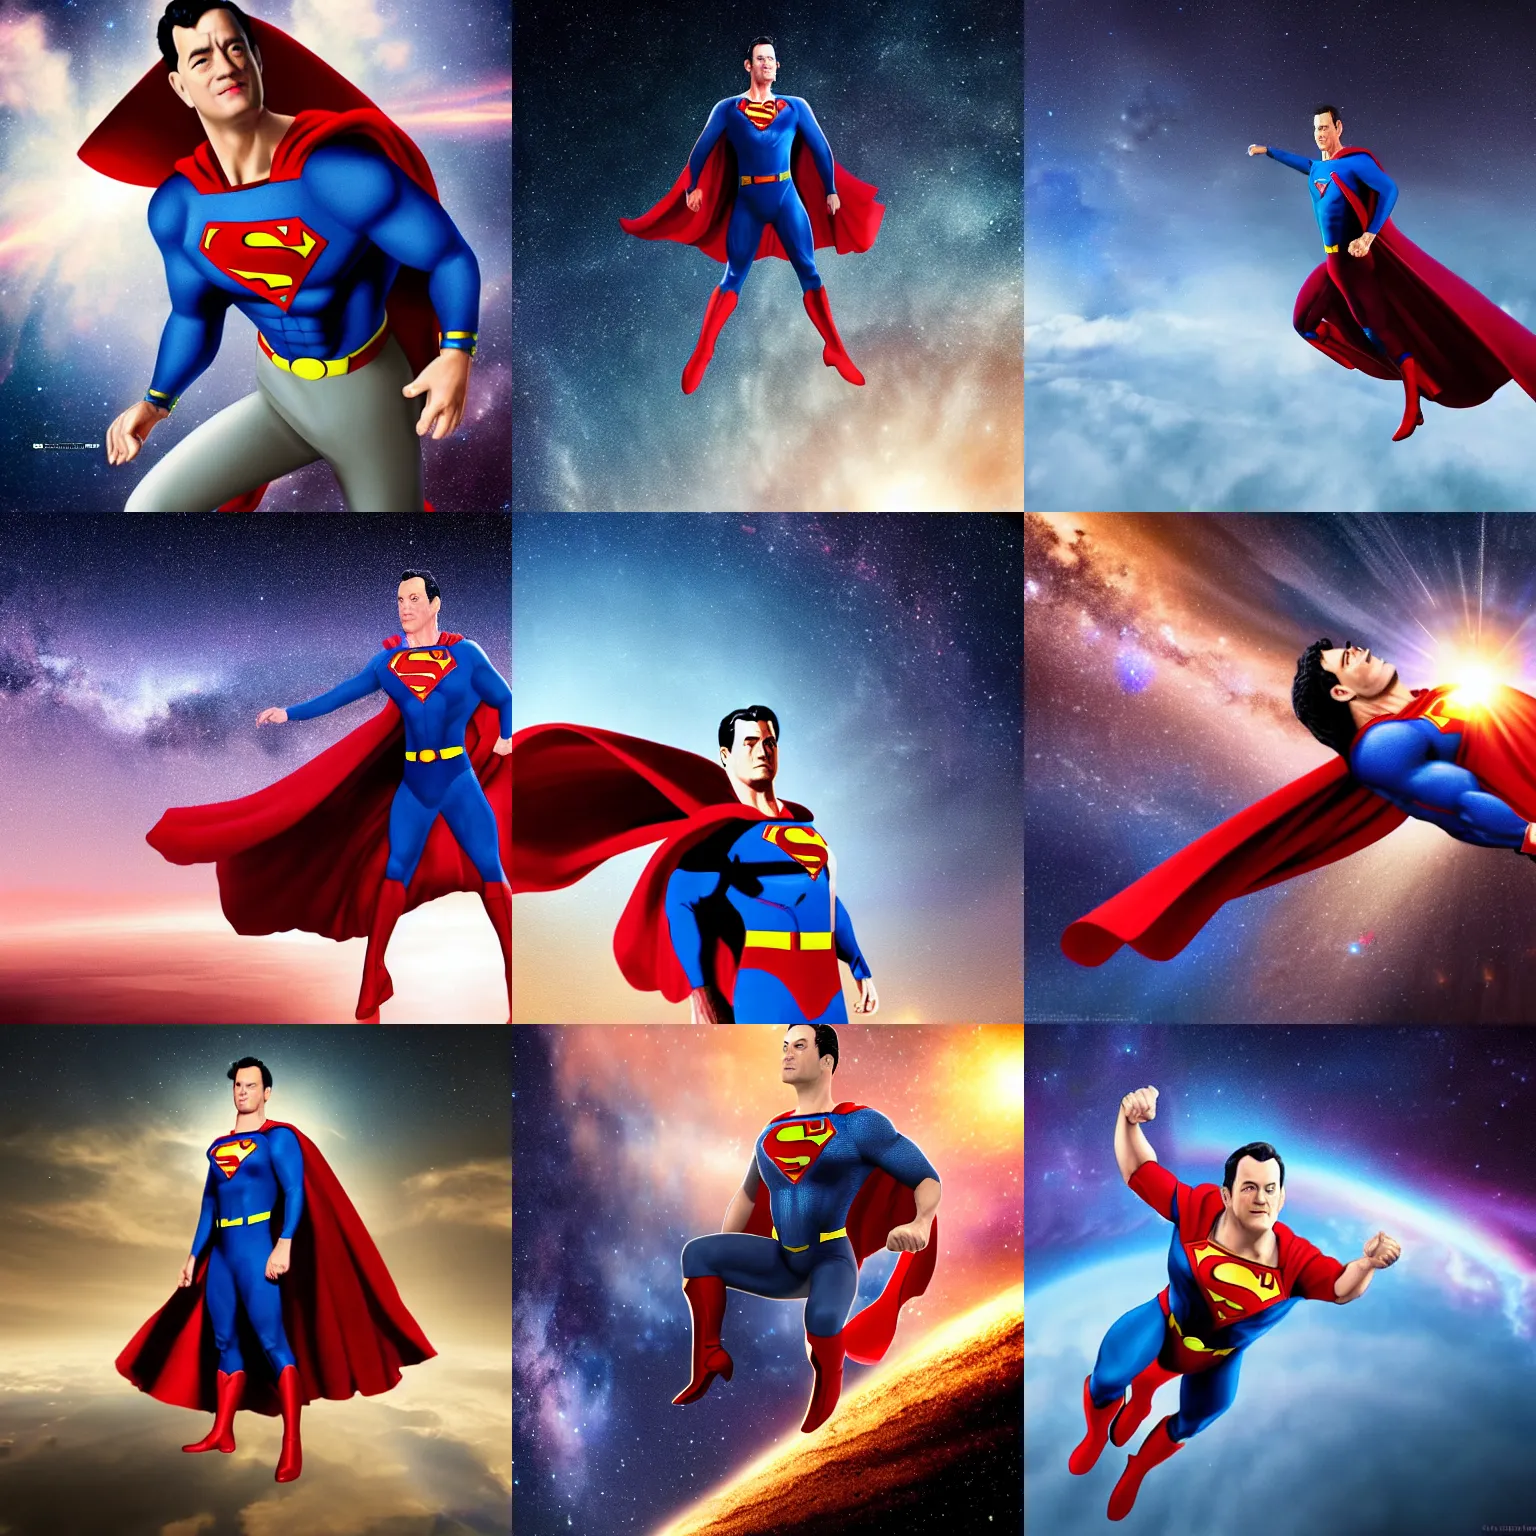 Prompt: tom hanks as superman, flying over the milky way, epic digital art, cinematic, trending on artstation, superb detail 8 k masterpiece